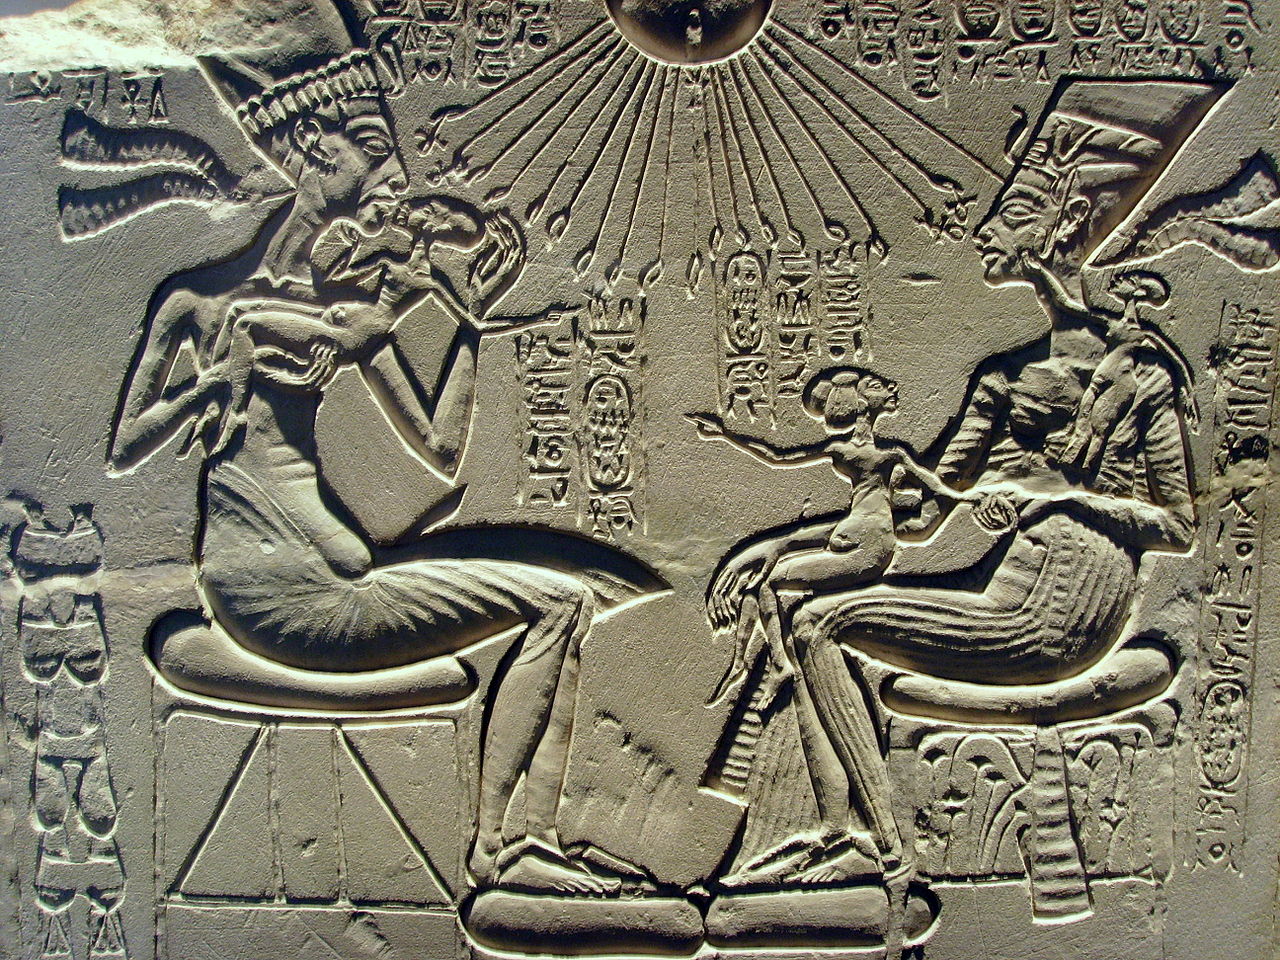 1280px-Akhenaten,_Nefertiti_and_their_children.jpg